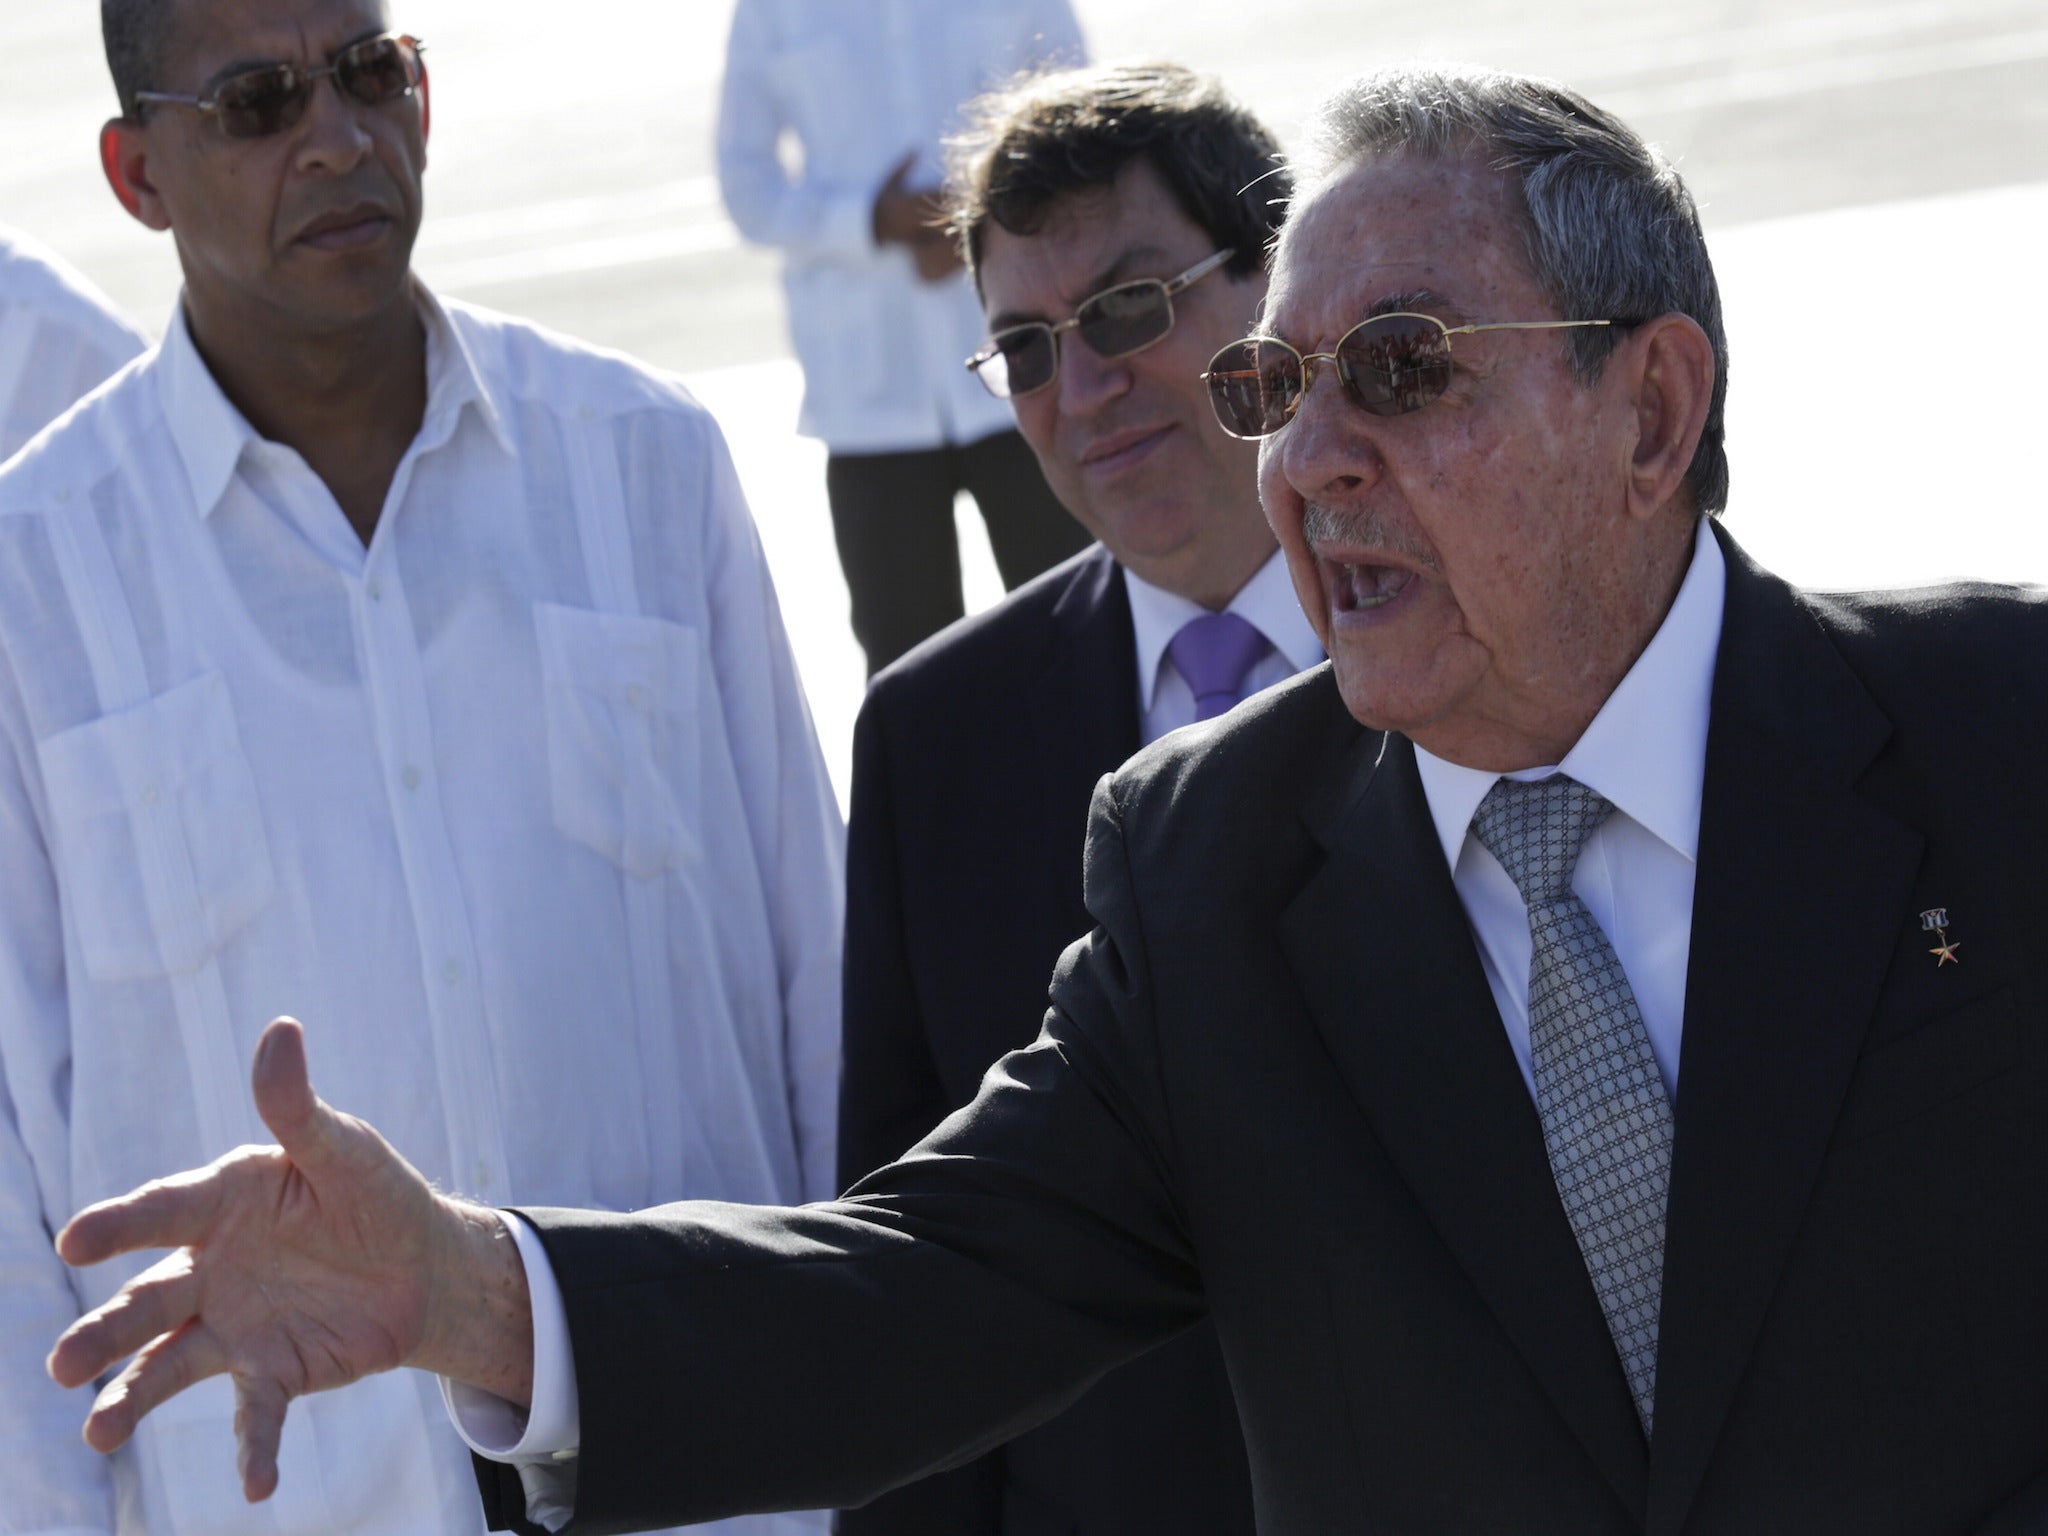 Raul Castro spoke to reporters in Havana